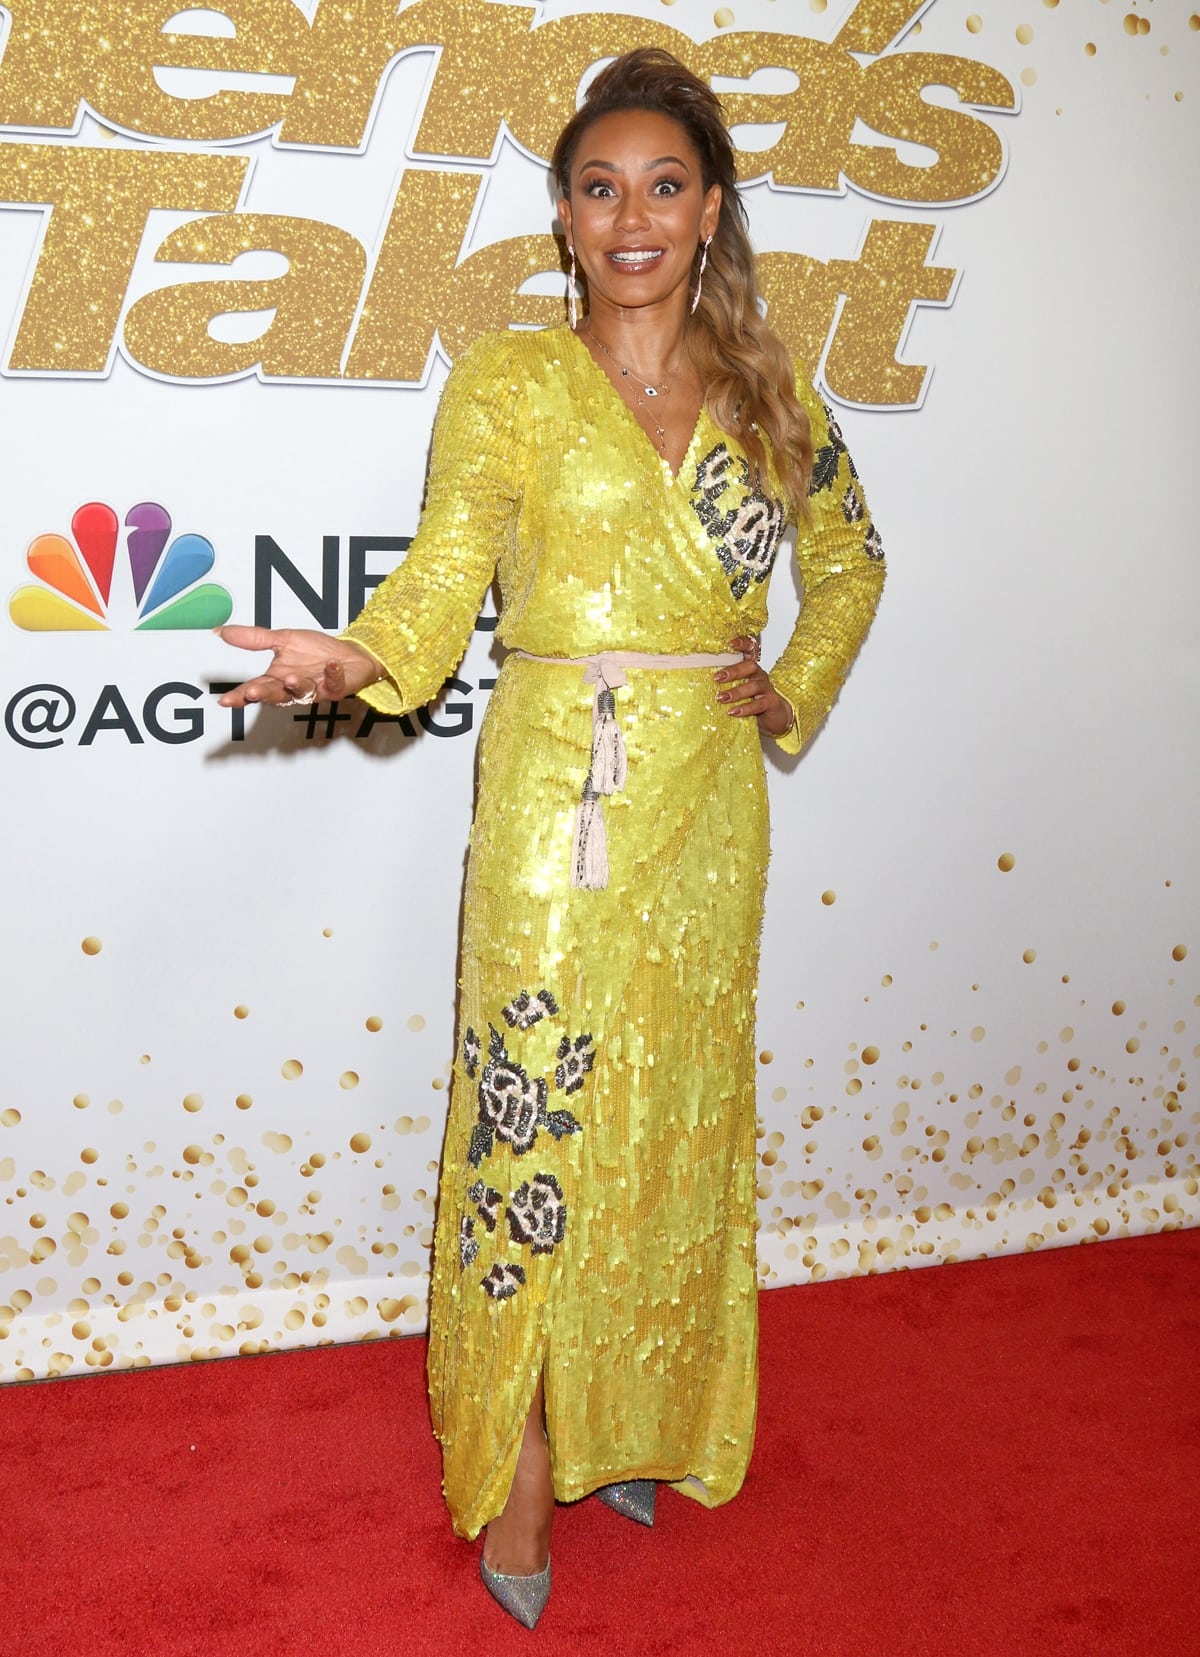 Mel B in a glittering gold wrap dress at the "America's Got Talent" Season 13 Live Show